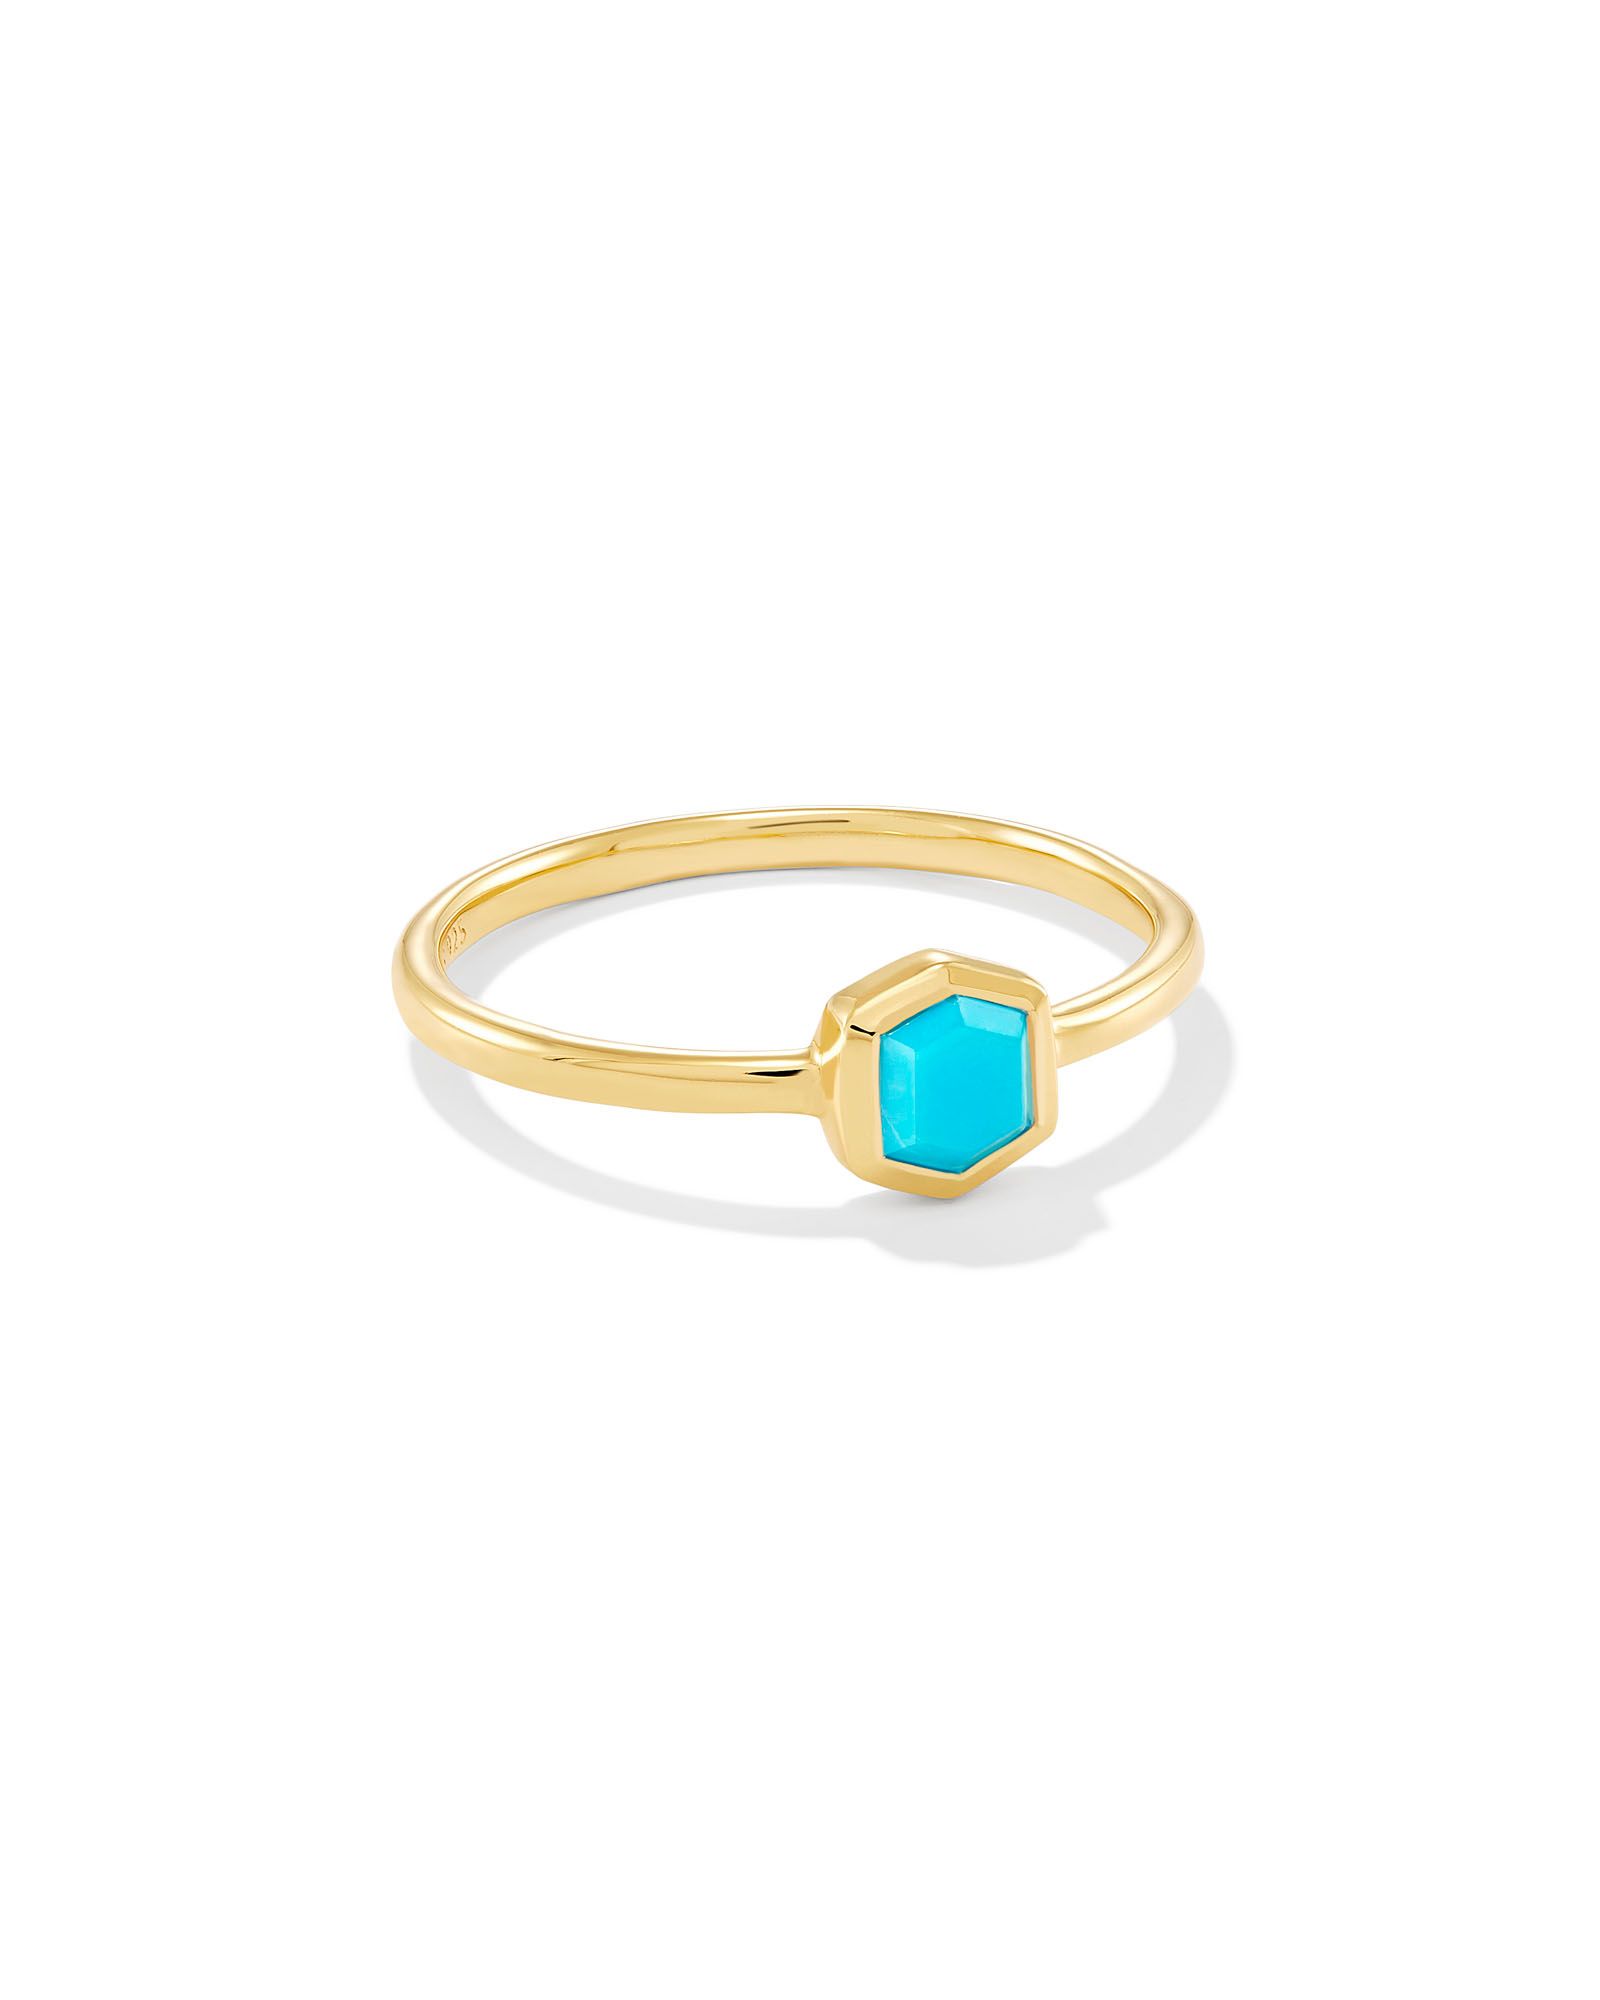 Davie 18k Gold Vermeil Band Ring in Turquoise | Kendra Scott | Kendra Scott